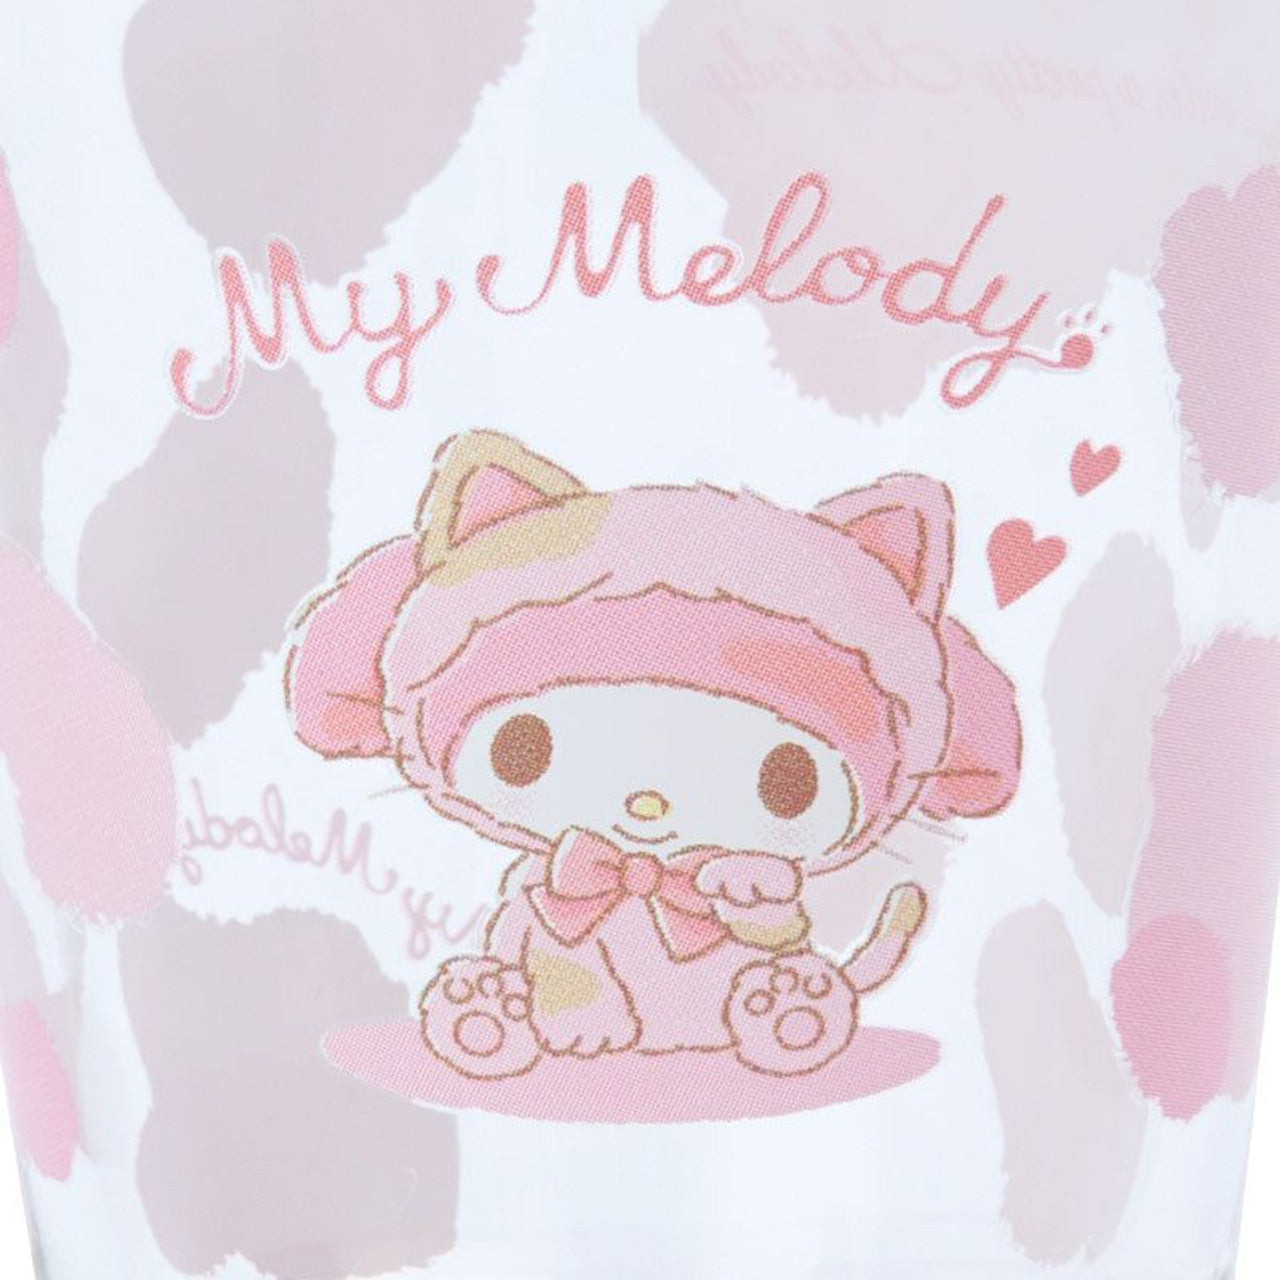 Sanrio - Glass My Melody (Nyanko)